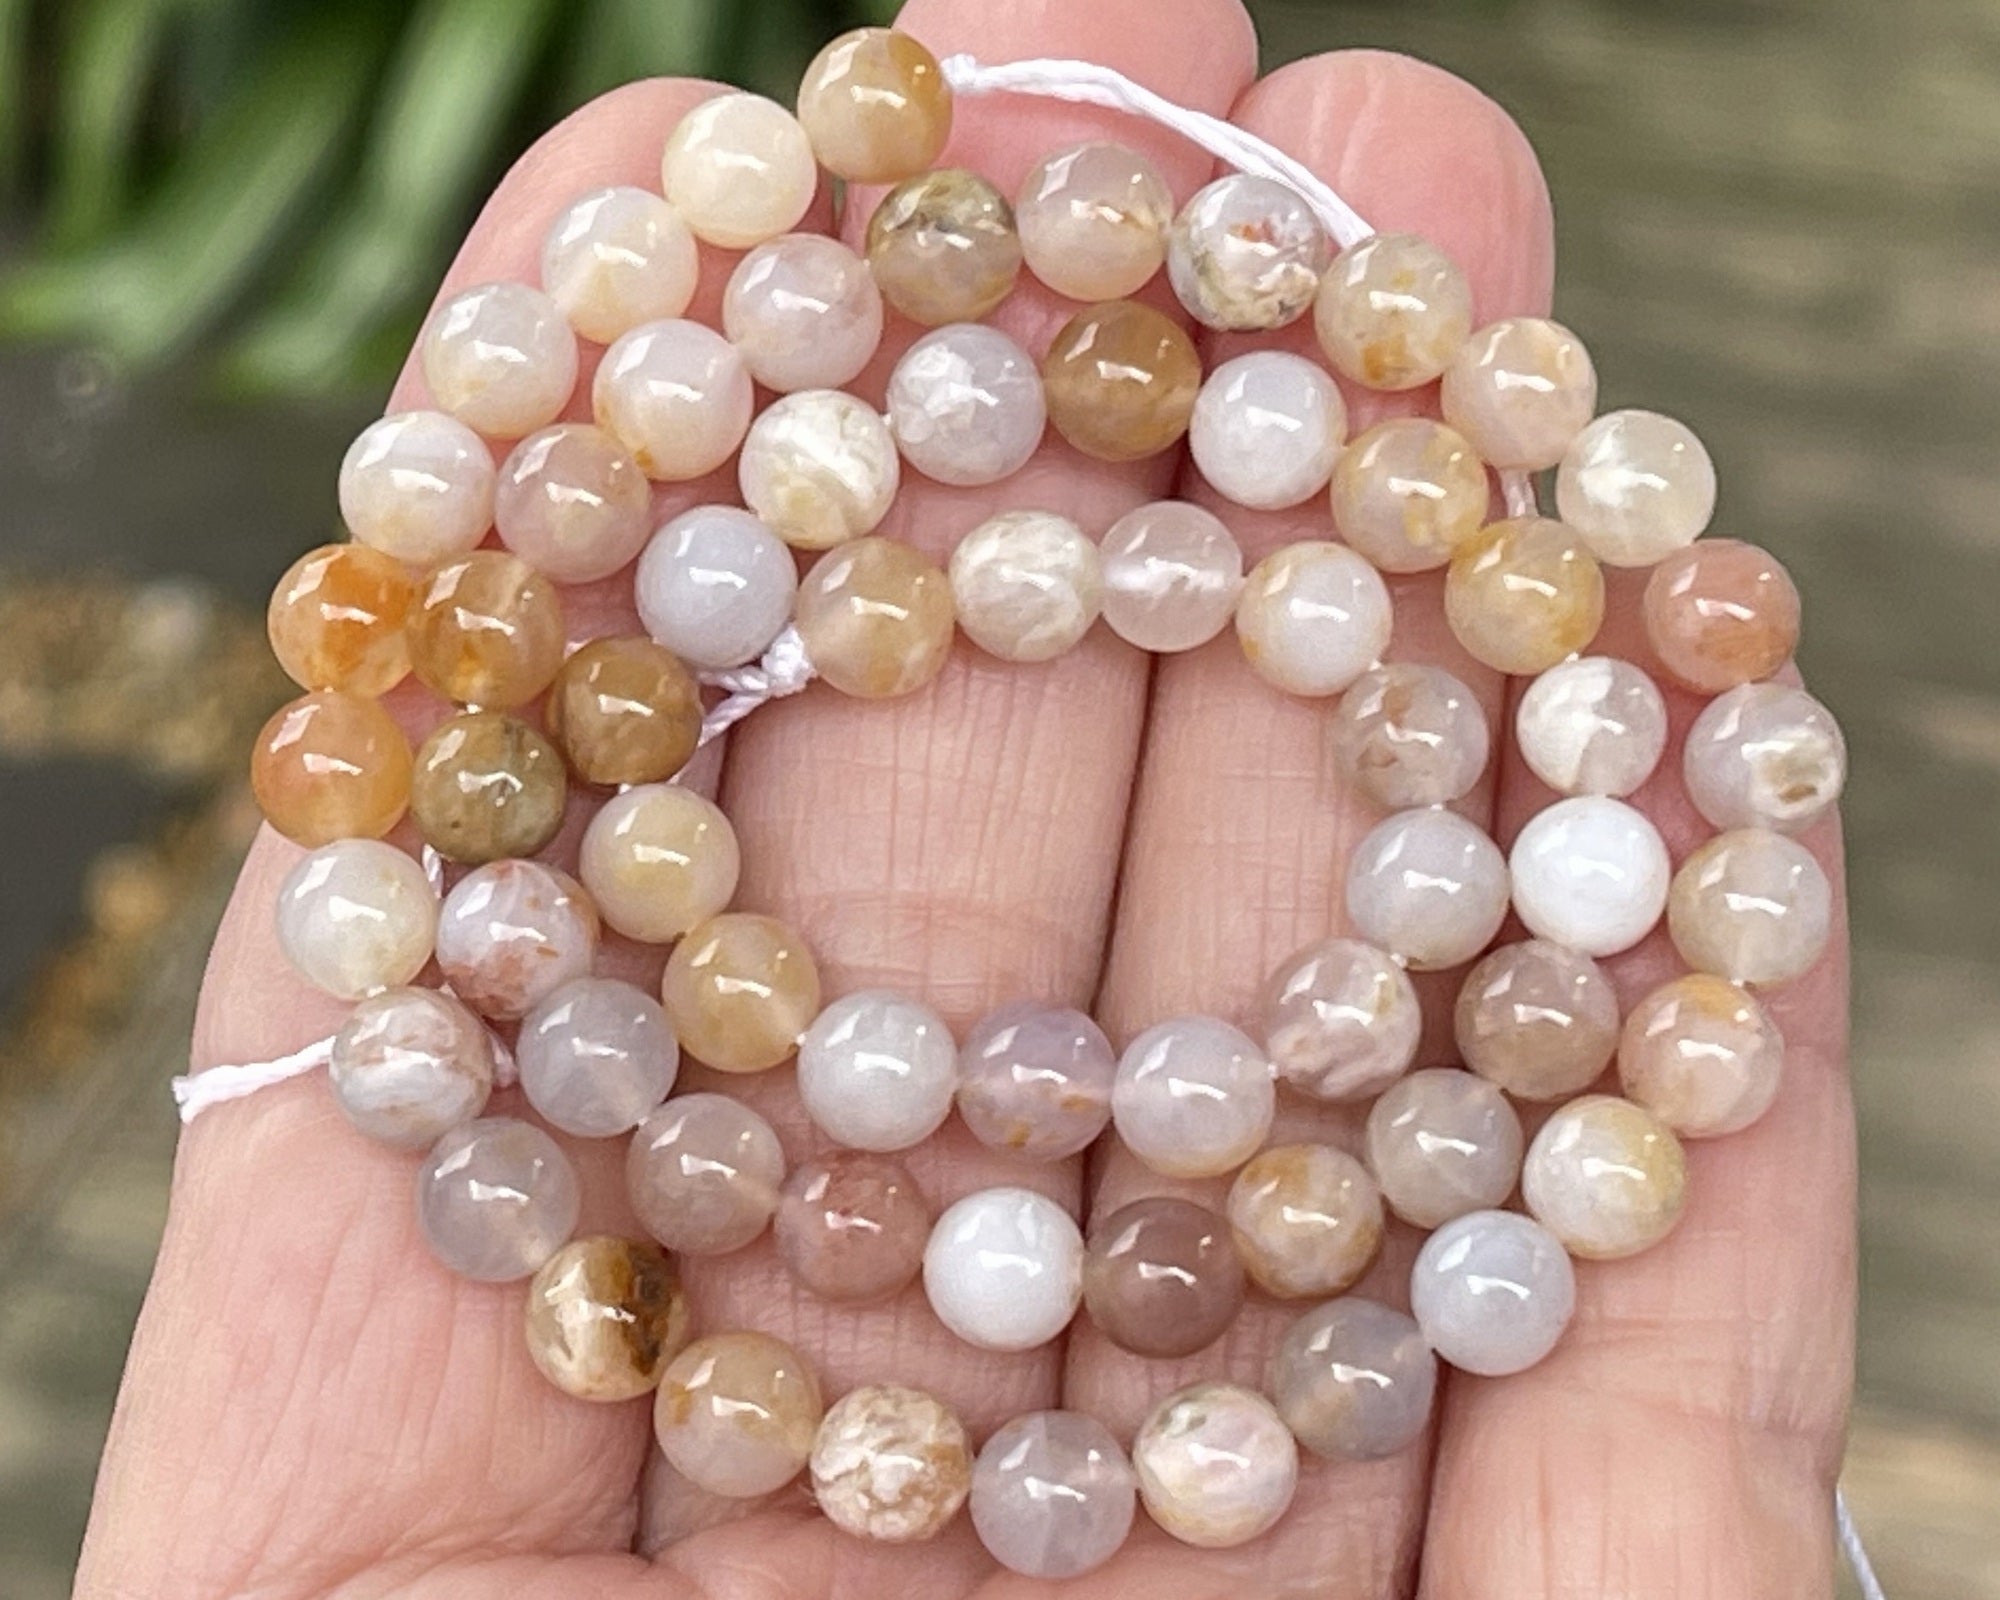 Australian Agate 6mm round natural gemstone beads 15.5" strand